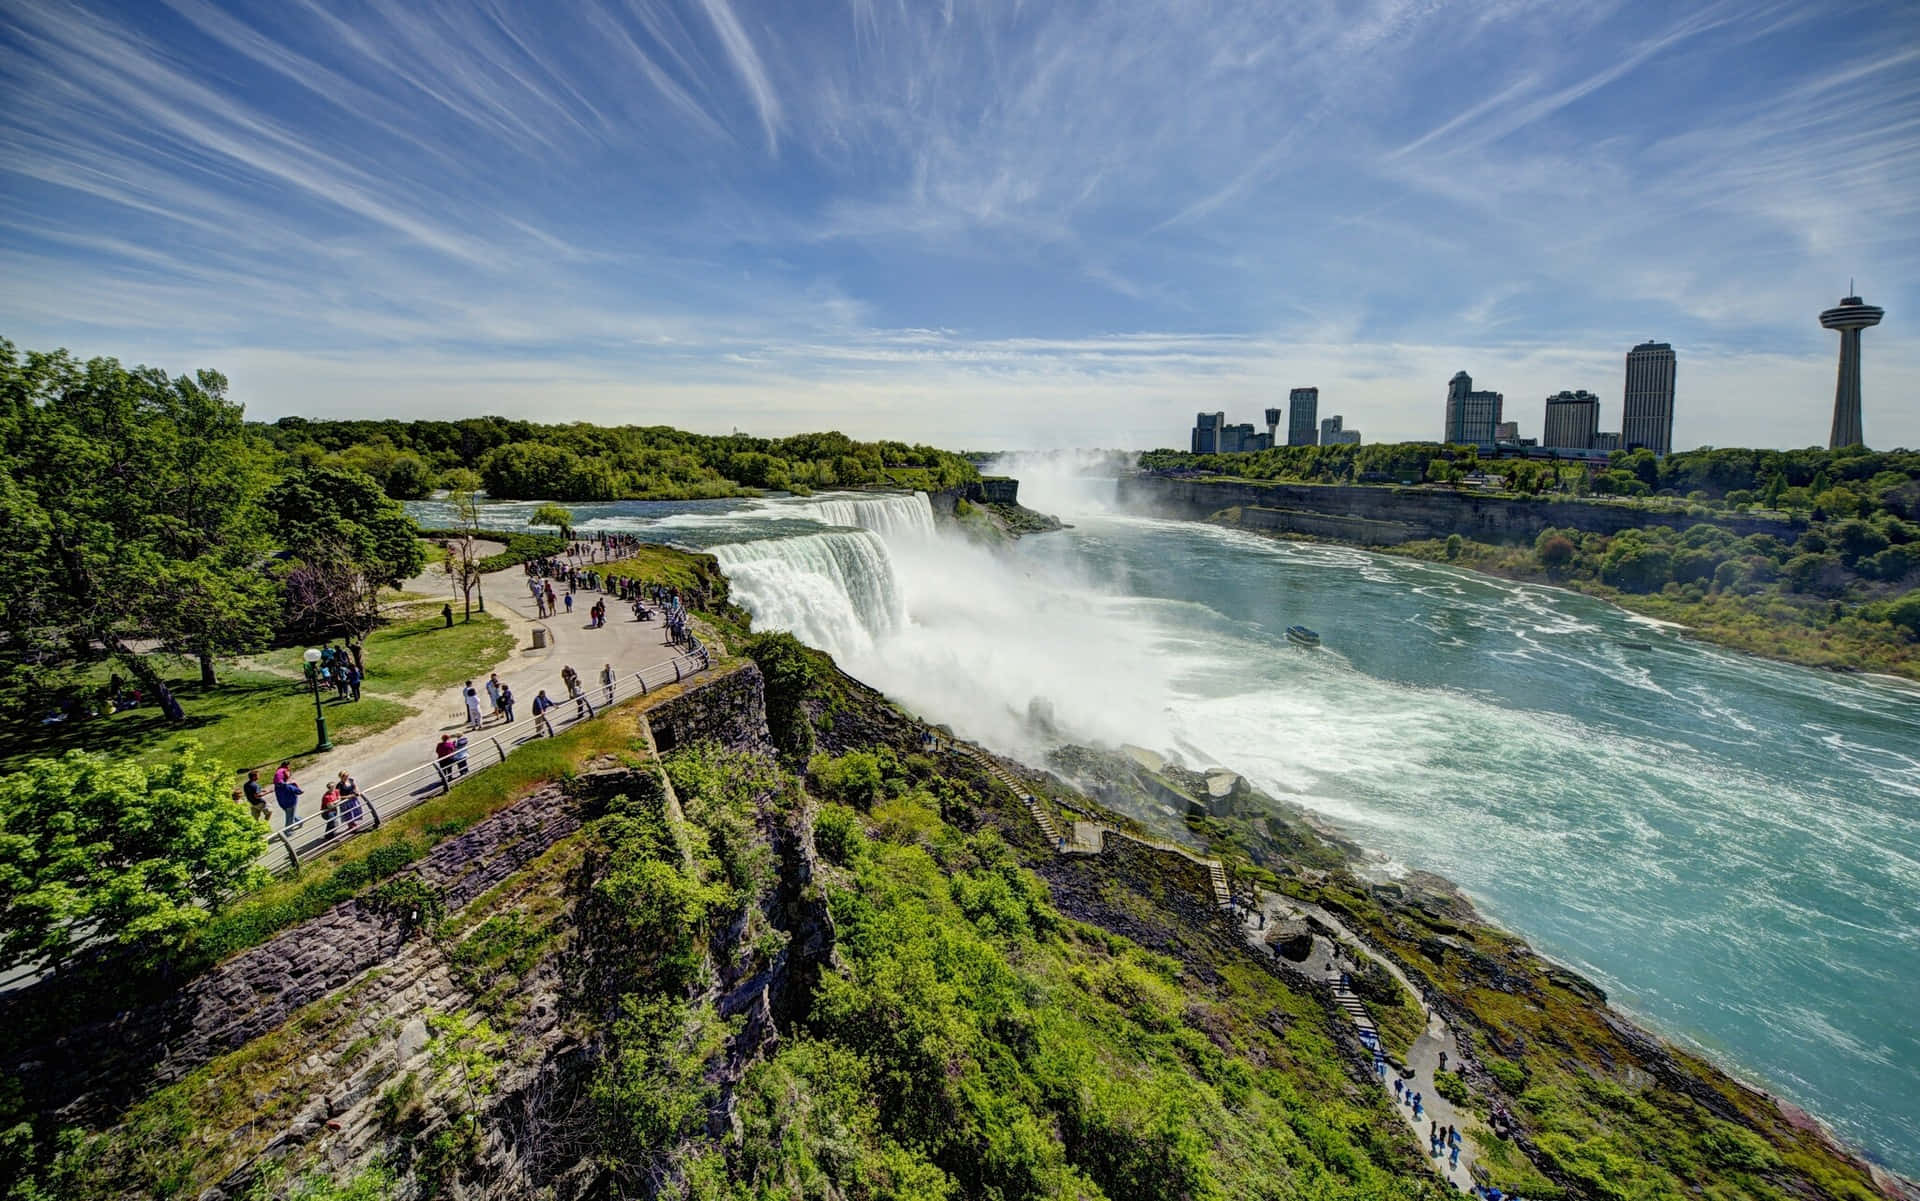 Niagara Falls, stunning and majestic